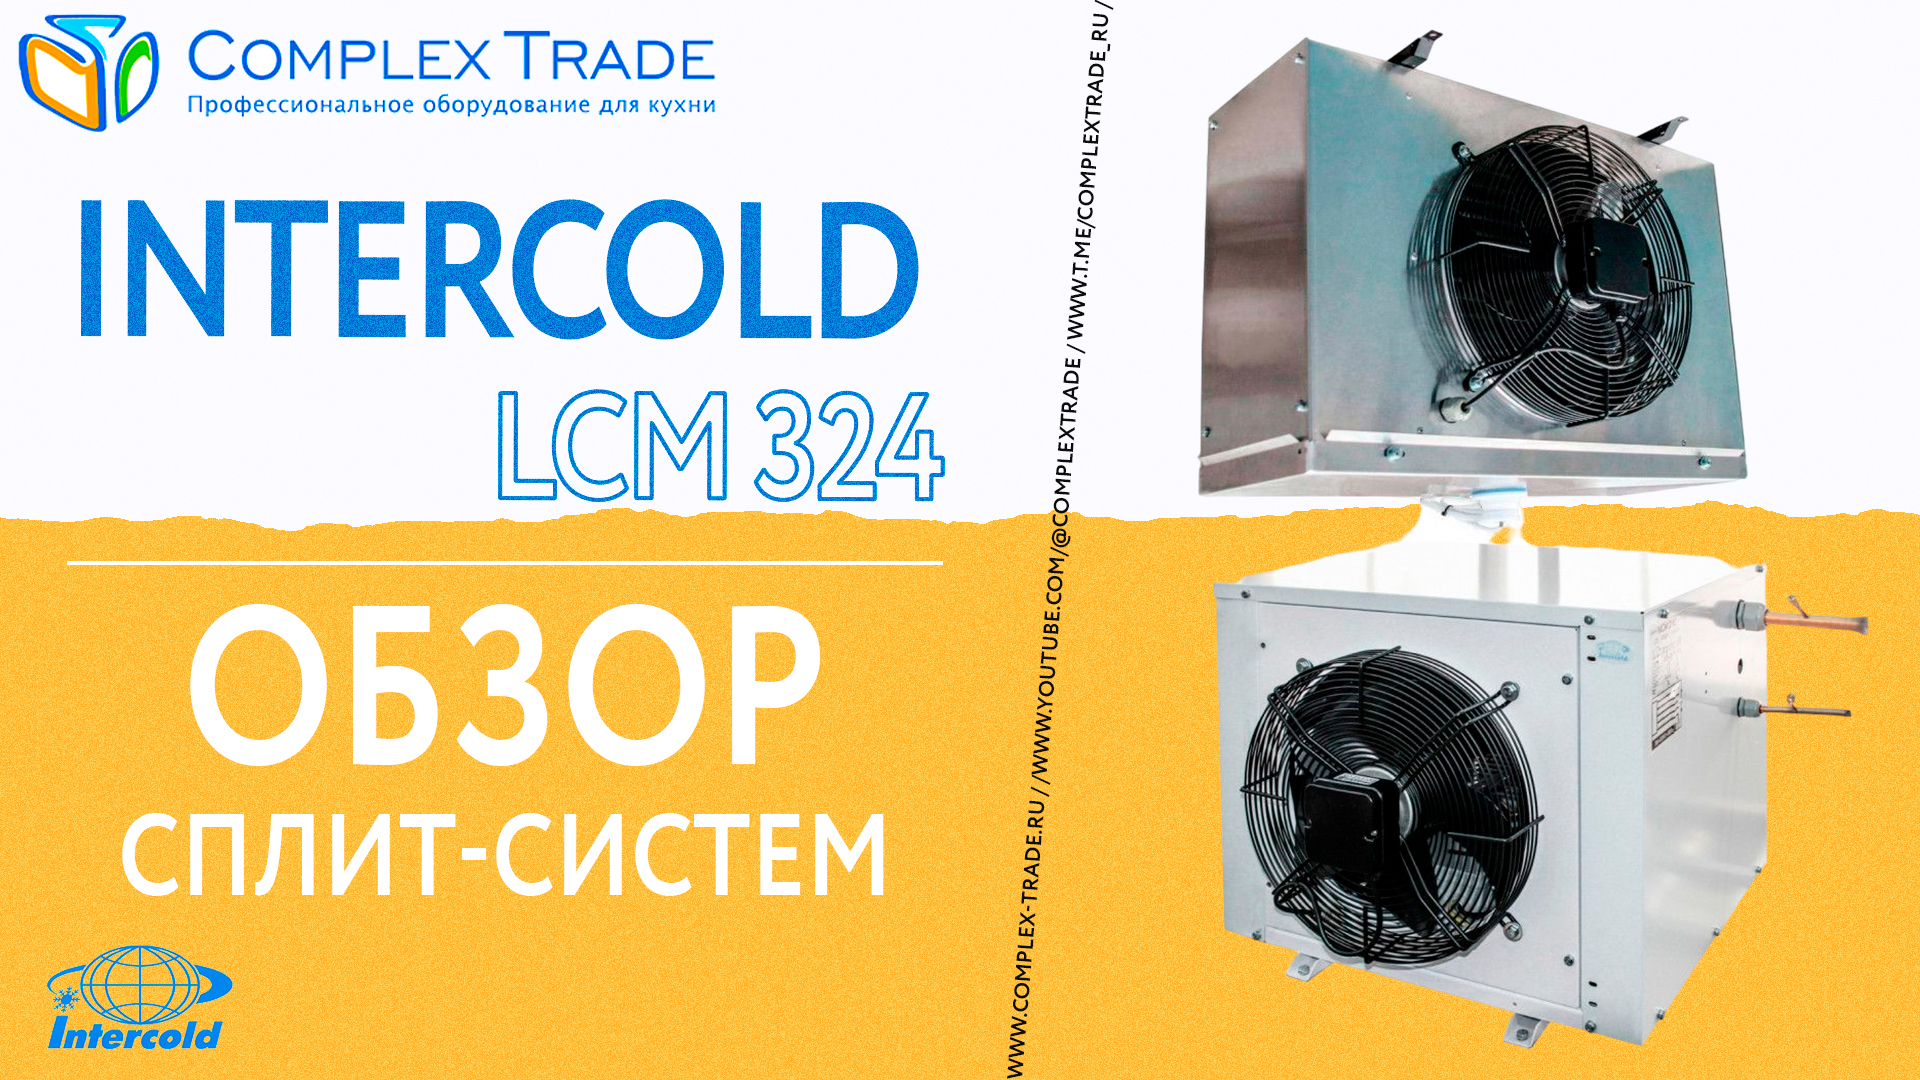 Intercold LCM 324 - Обзор сплит-систем